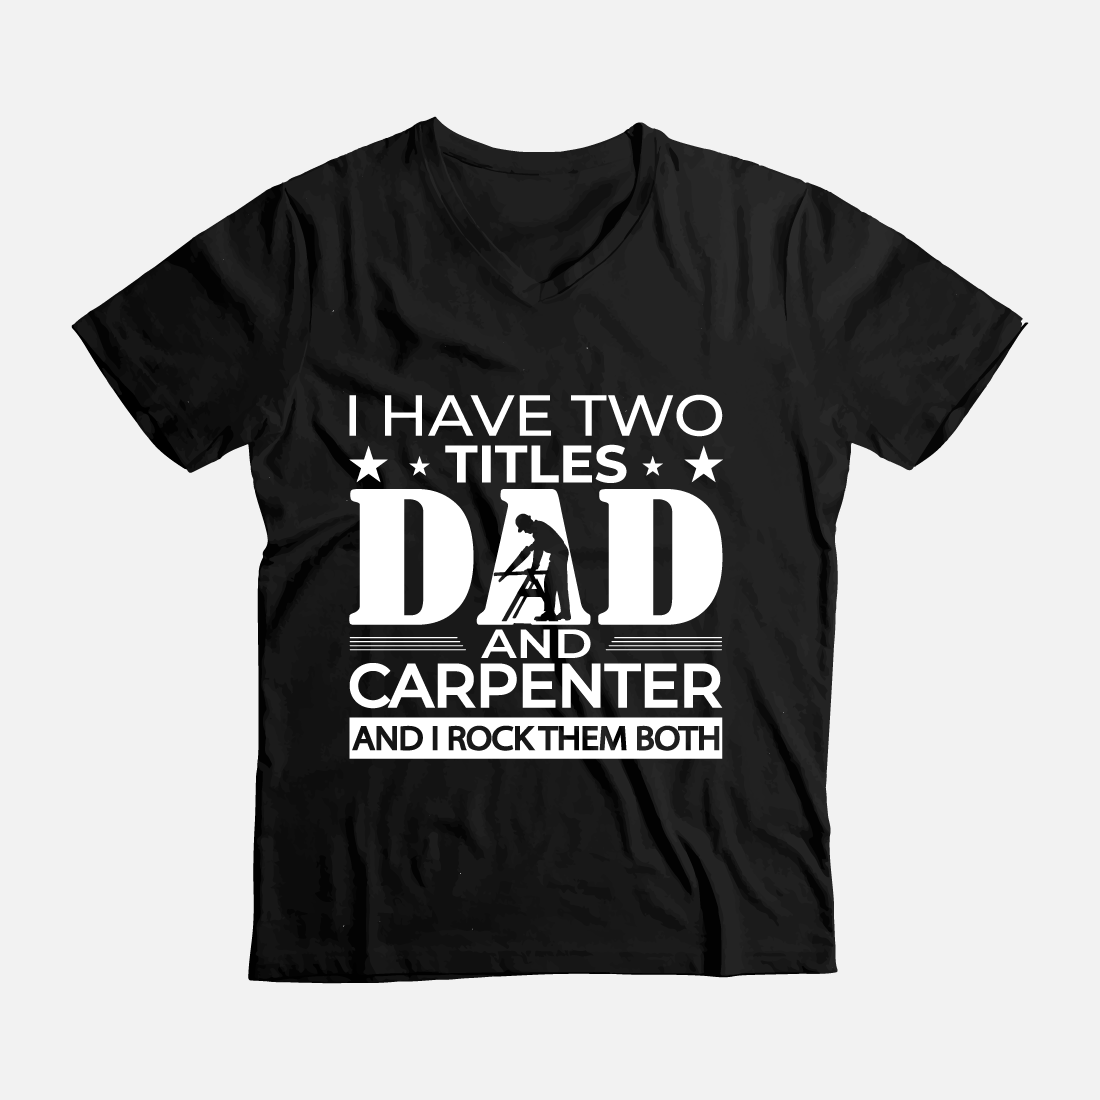 Carpenter dad t-shirt design cover image.